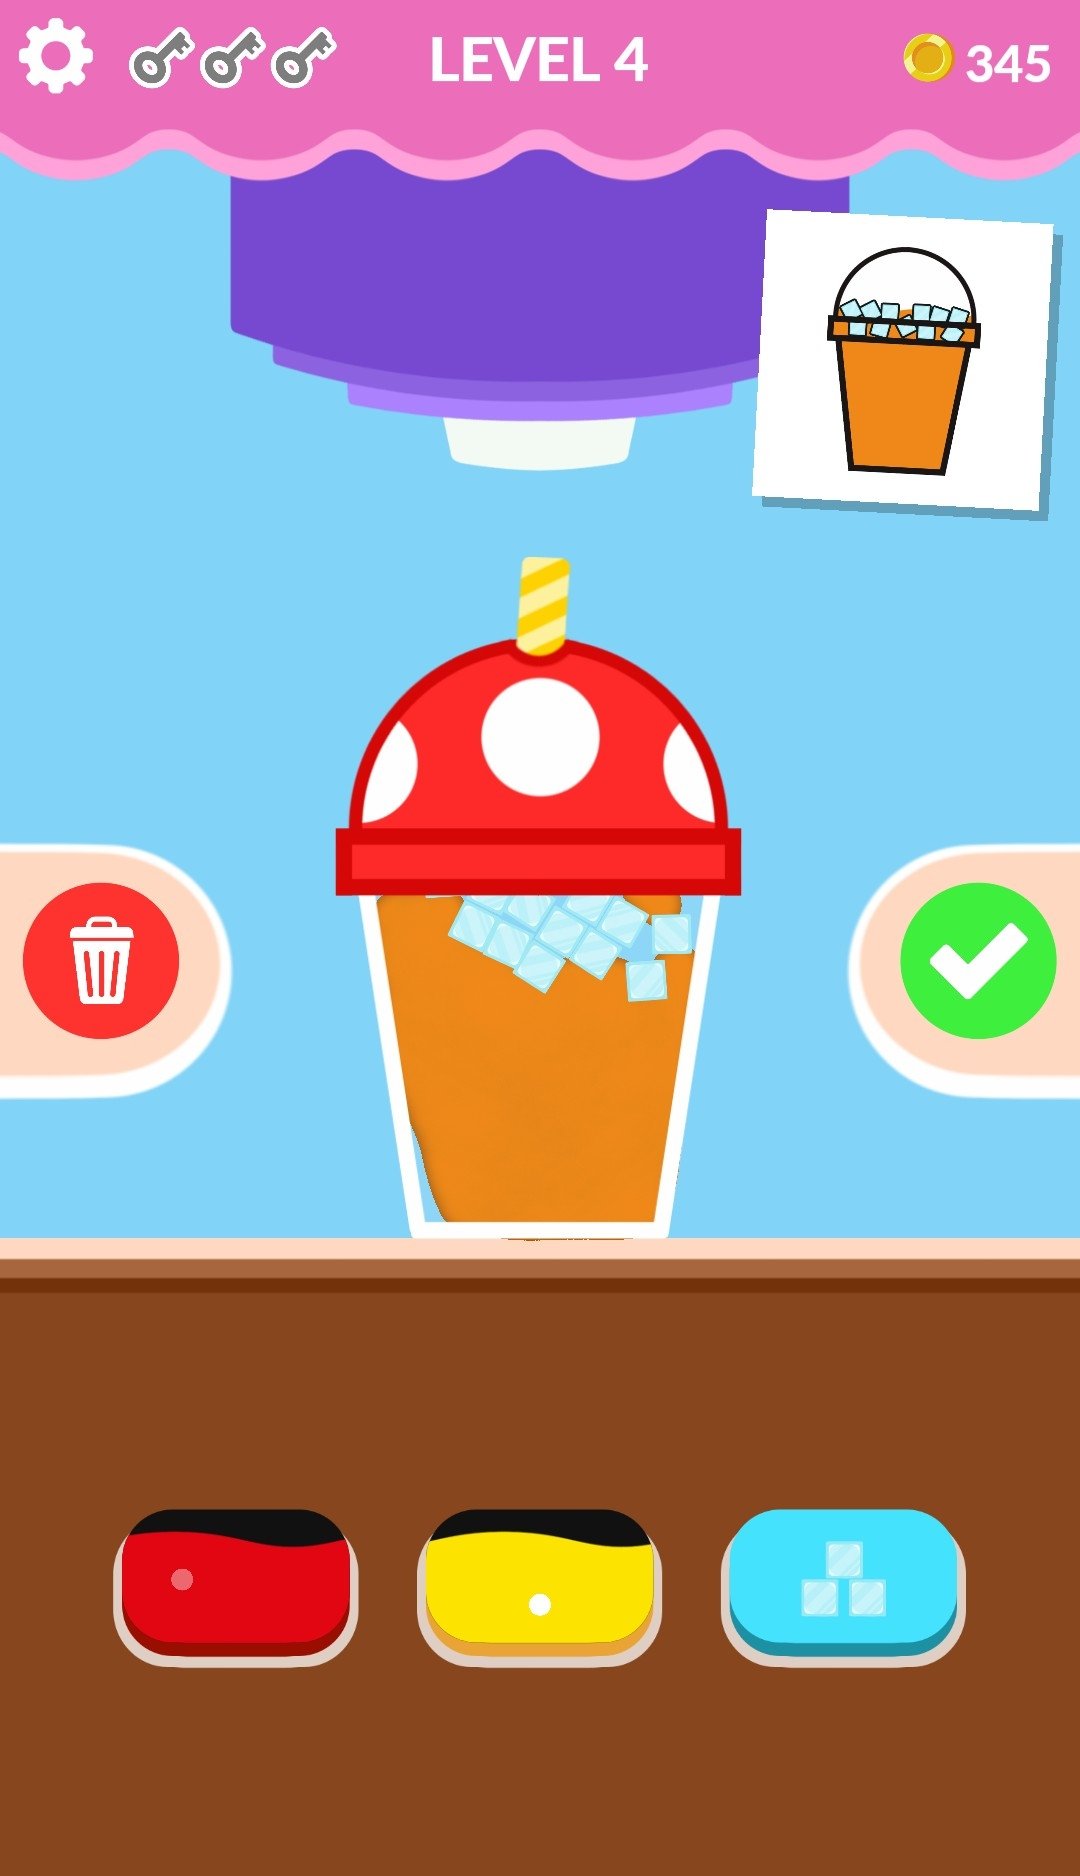 Baixar Bubble Tea! 3.0 Android - Download APK Grátis